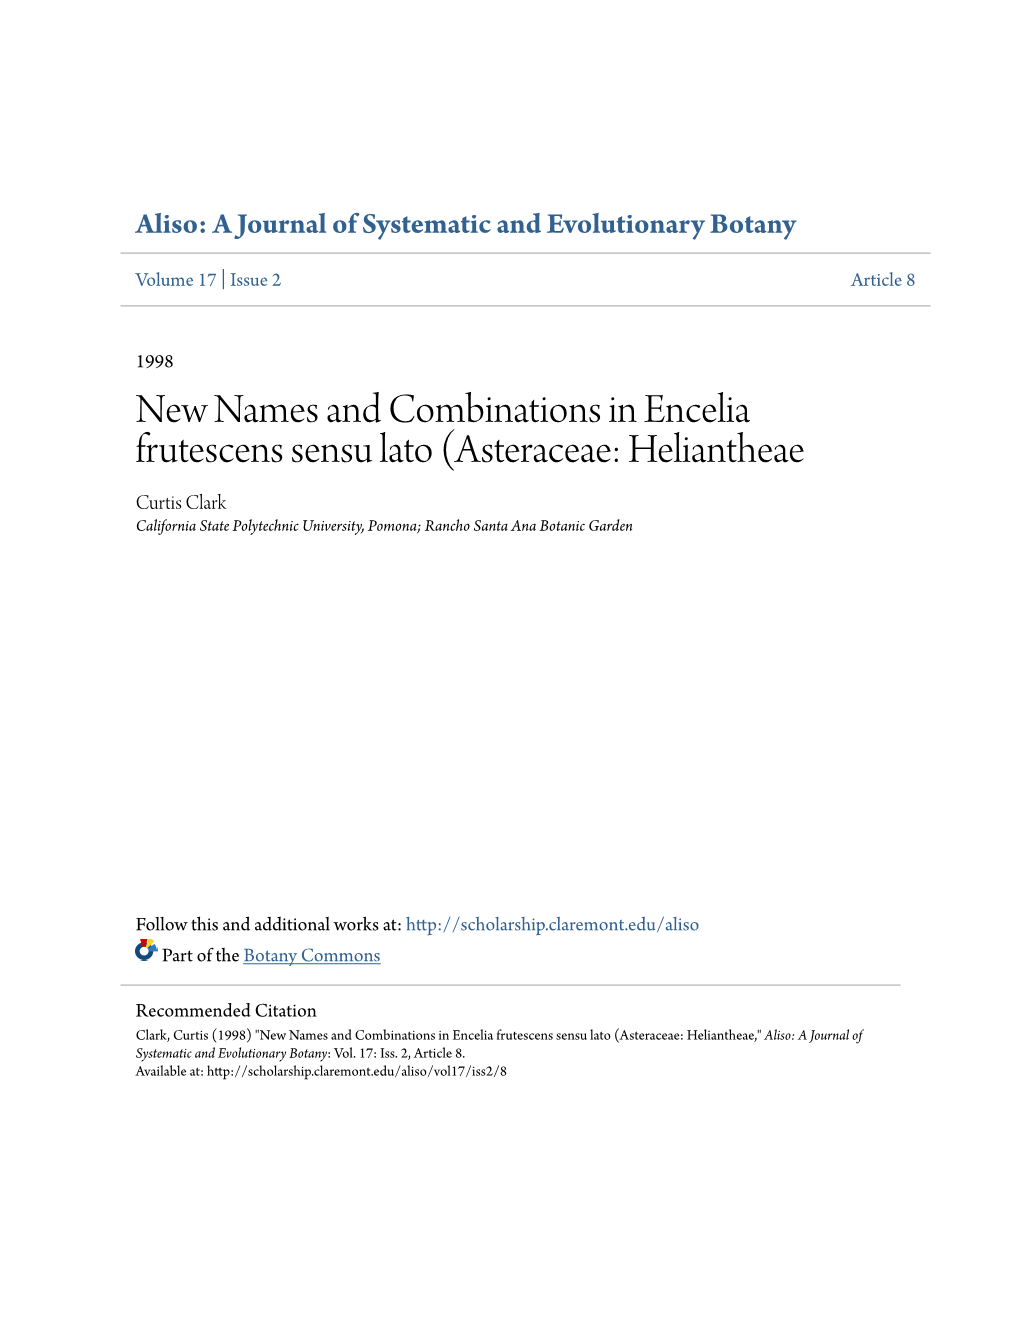 New Names and Combinations in Encelia Frutescens Sensu Lato